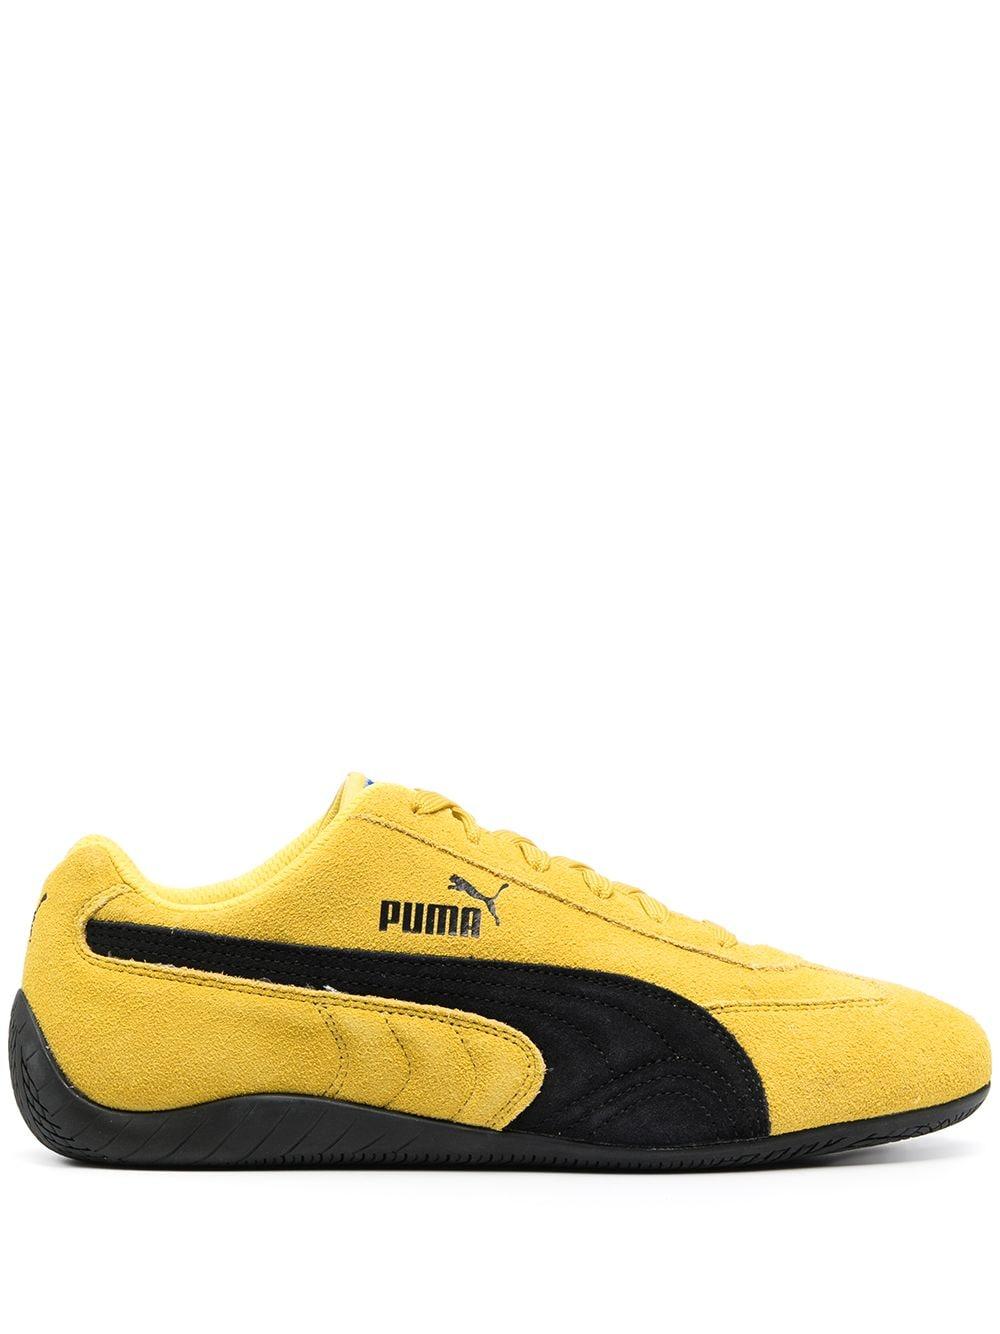 Puma speed cat classic yellow,cheap - OFF 68% -columbuscabinetscity.com